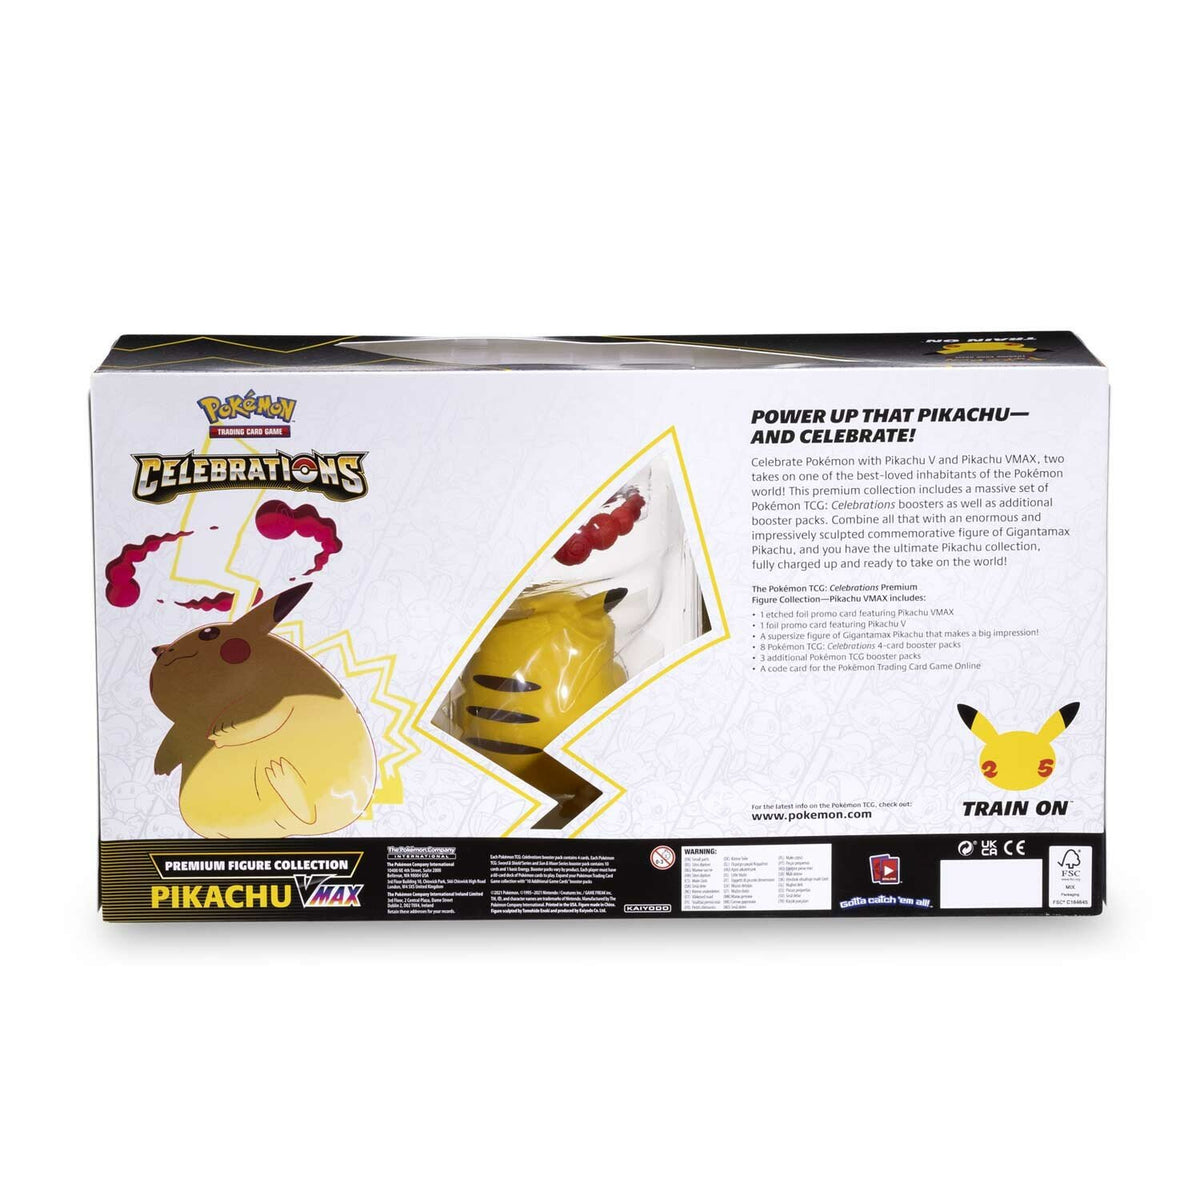 Pokemon TCG: Celebrations Premium Figure Collection—Pikachu VMAX-The Pokémon Company International-Ace Cards &amp; Collectibles